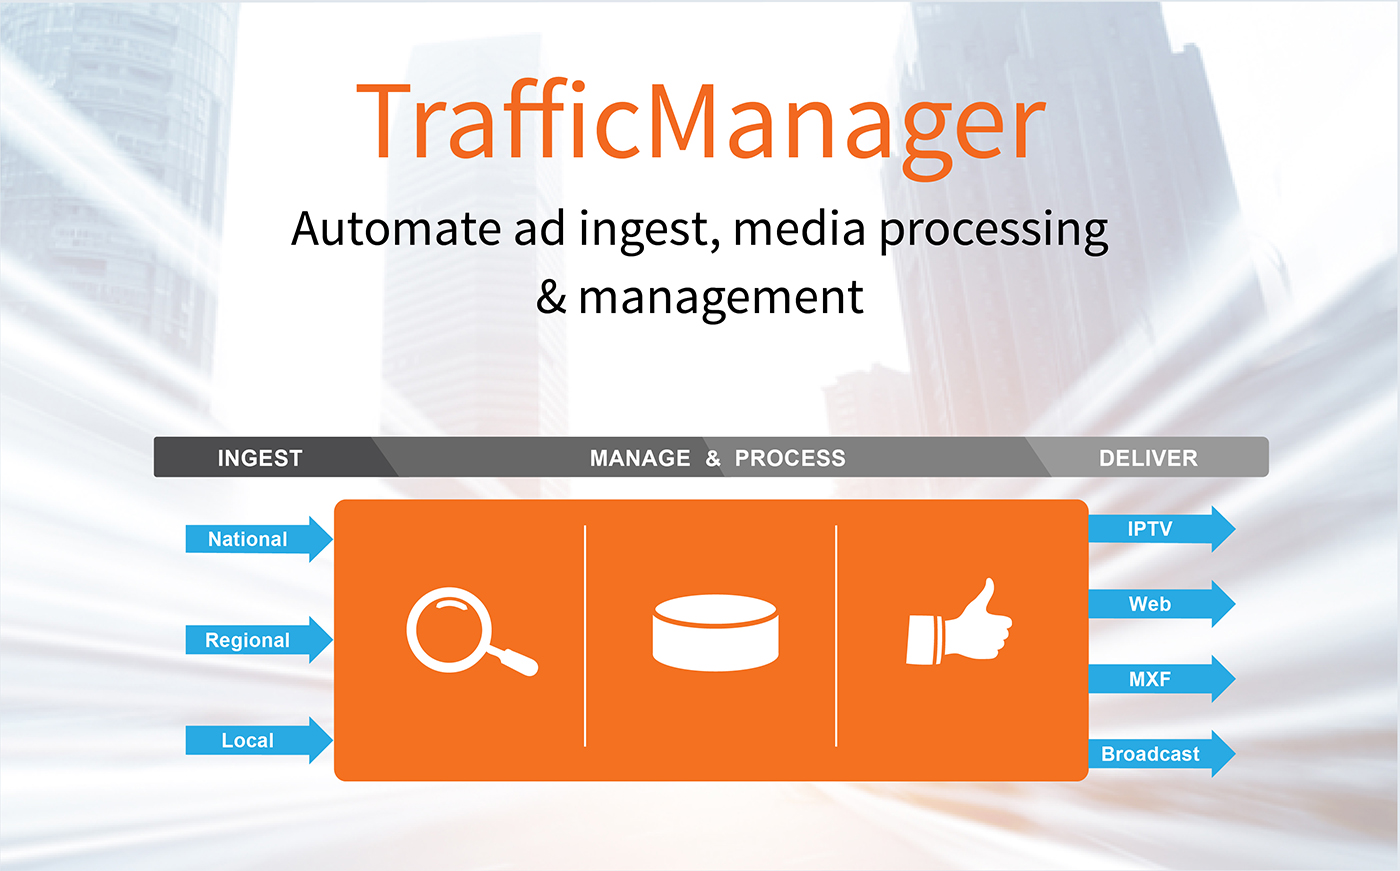 TrafficManager